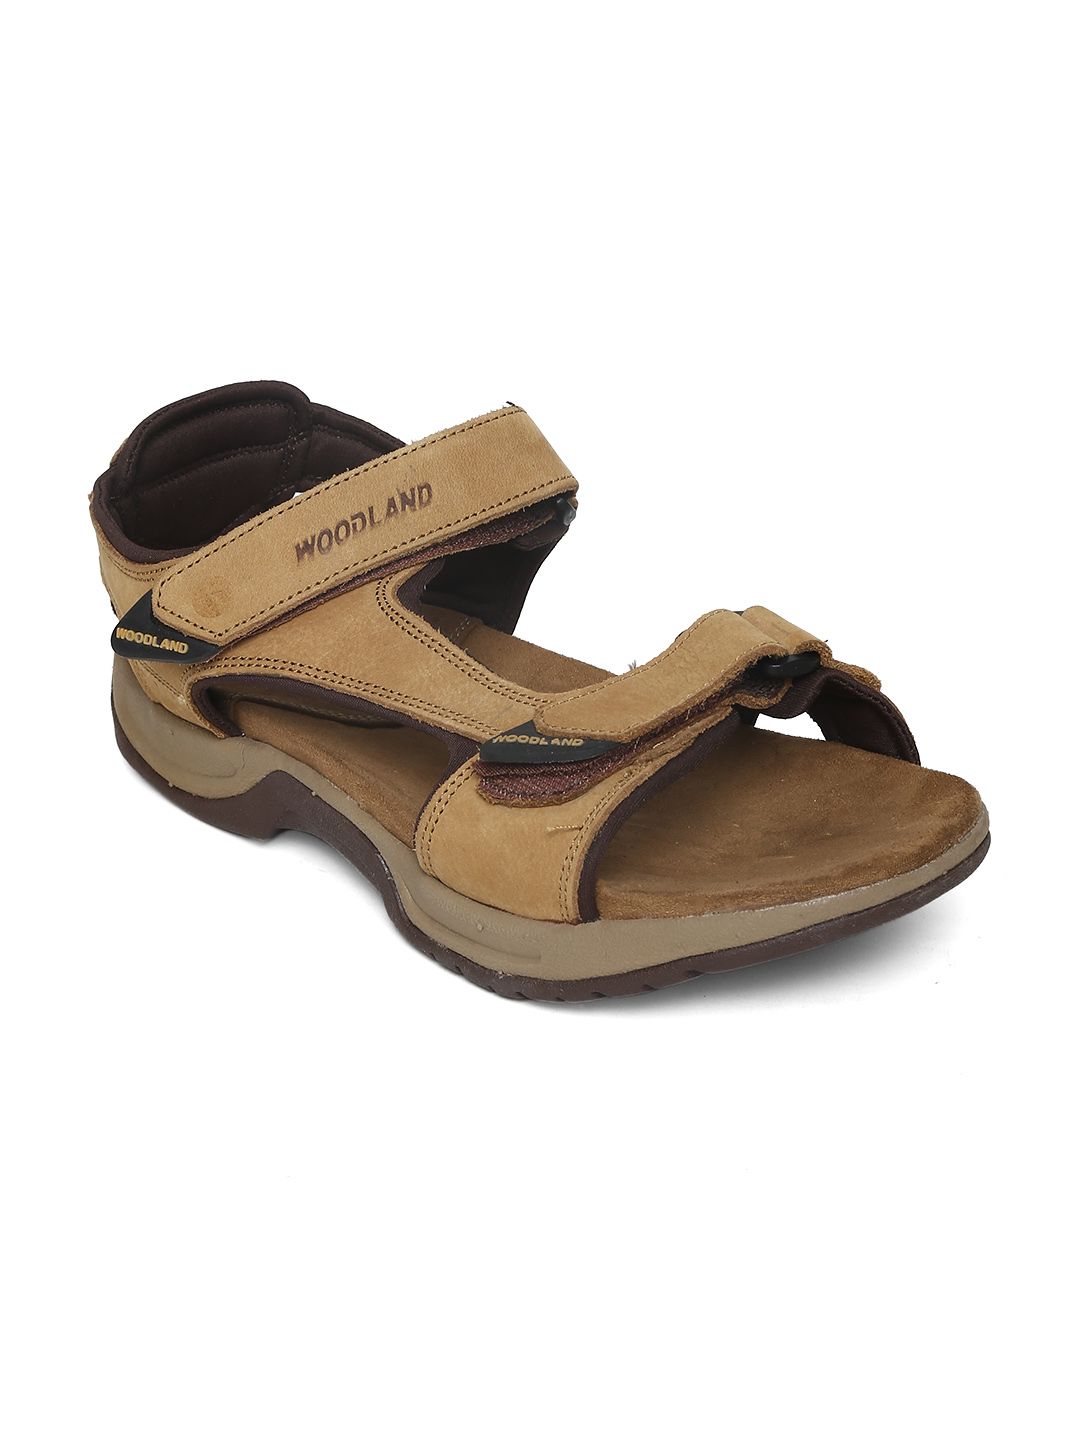 woodland sandals best offers online